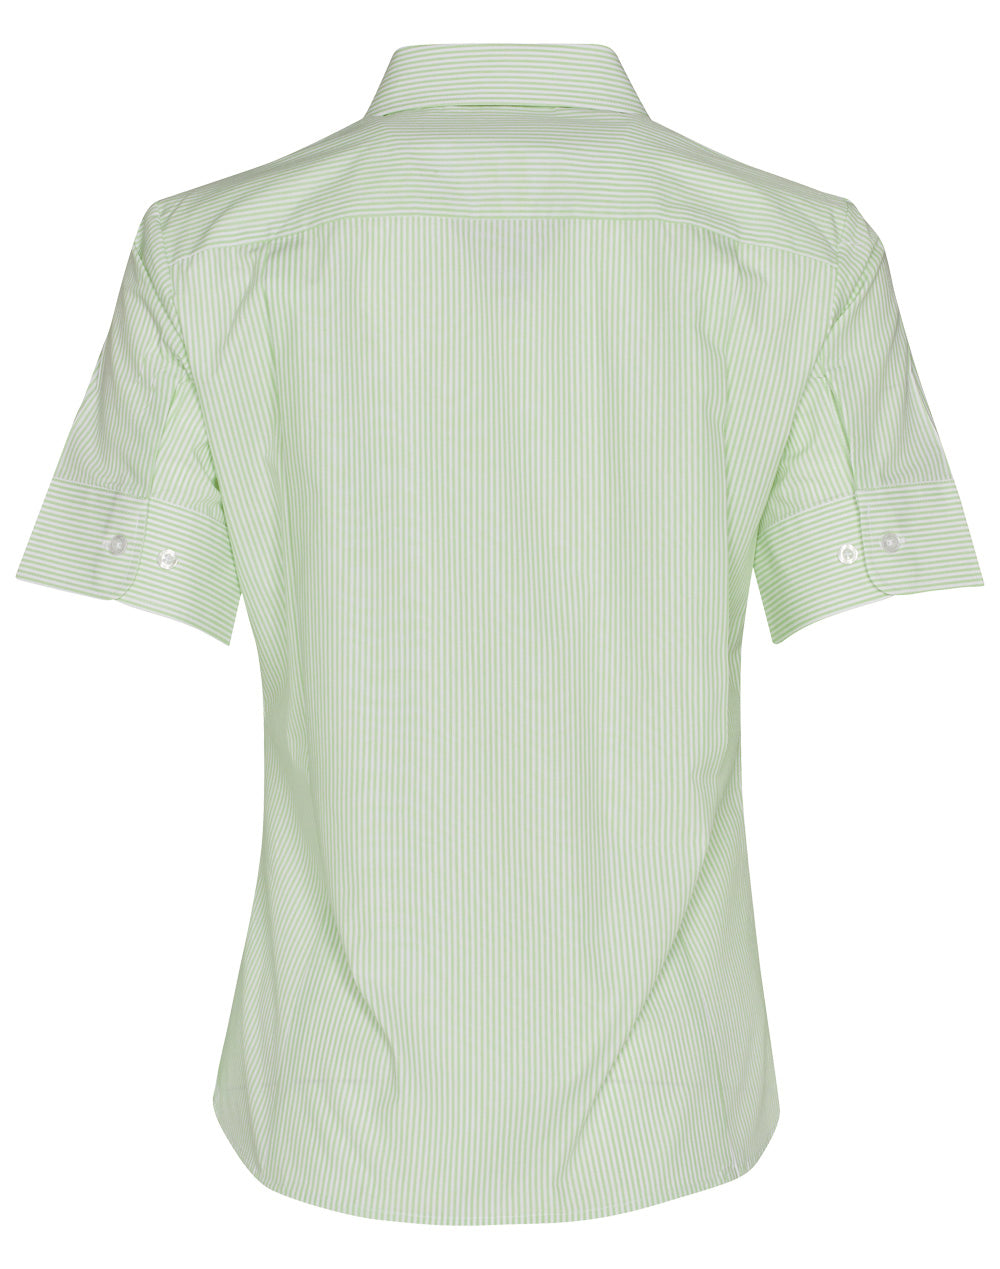 Winning Spirit -Women's Balance Stripe Short Sleeve Shirt -M8234